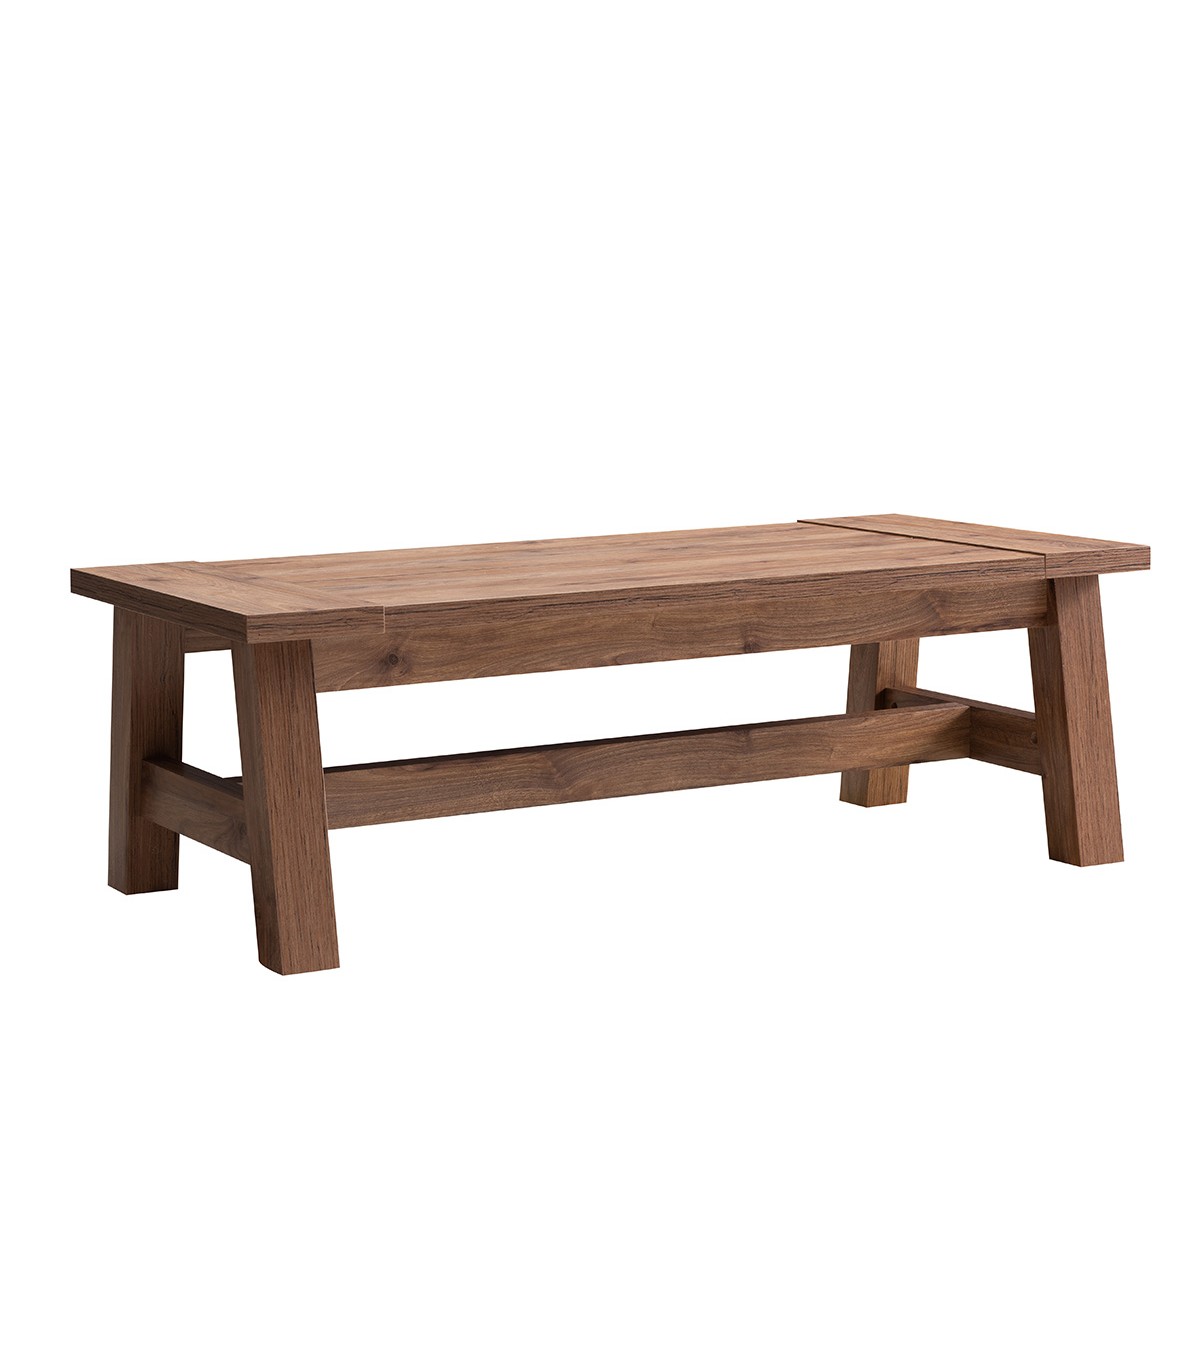 Table basse en bois style campagne - Marron